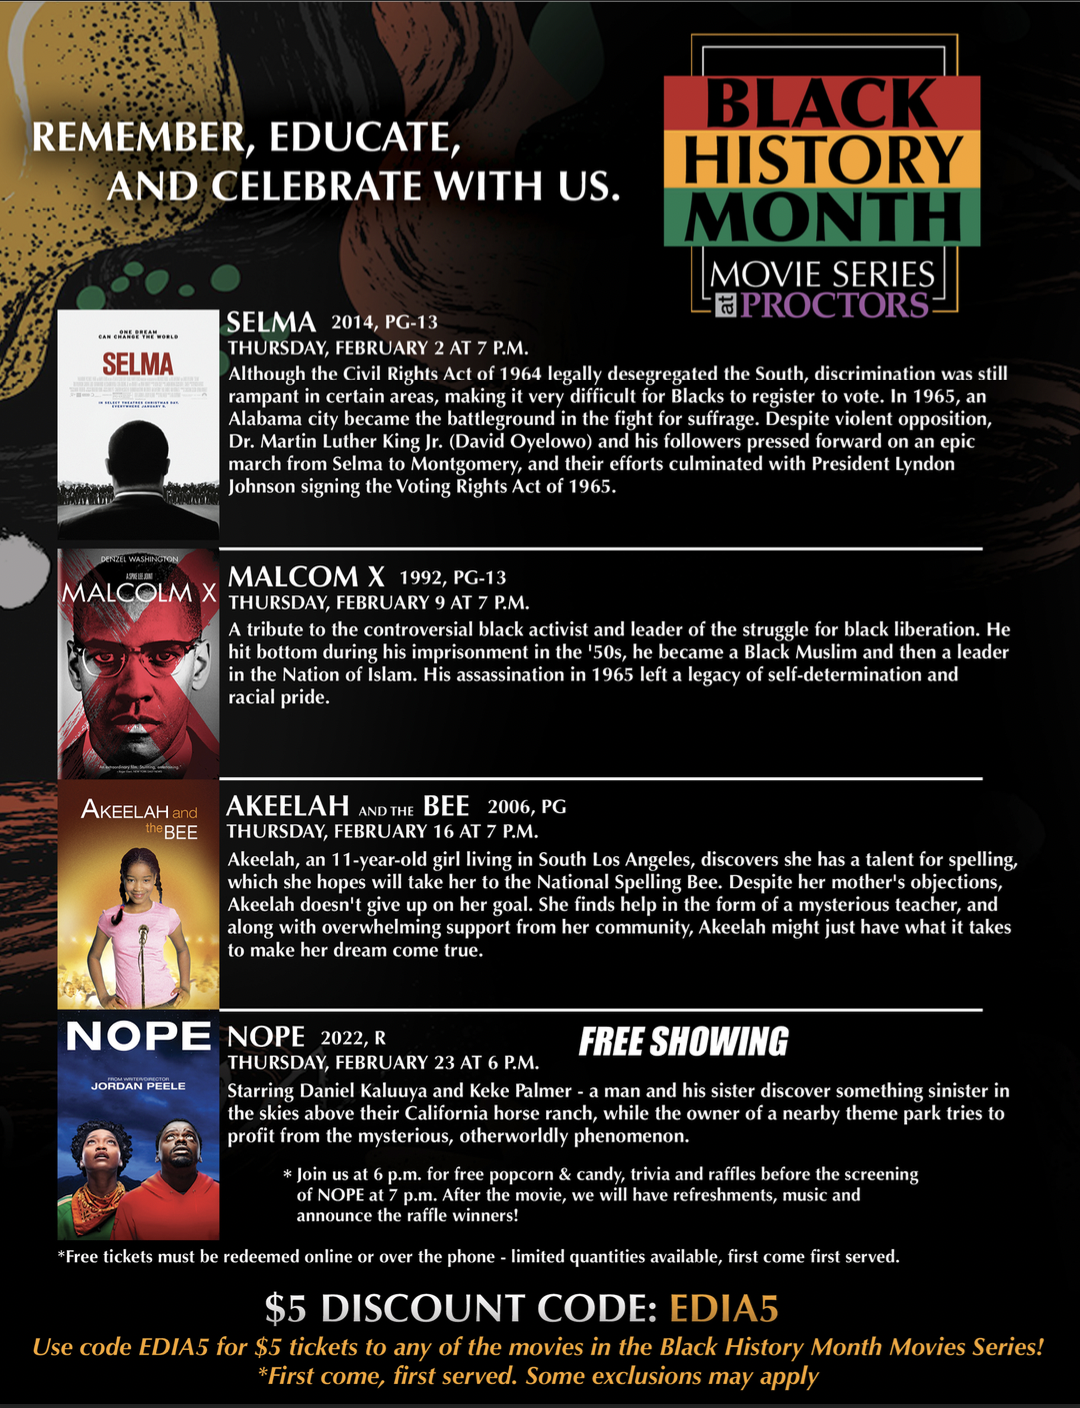 Black History Month Movie Series At Proctors